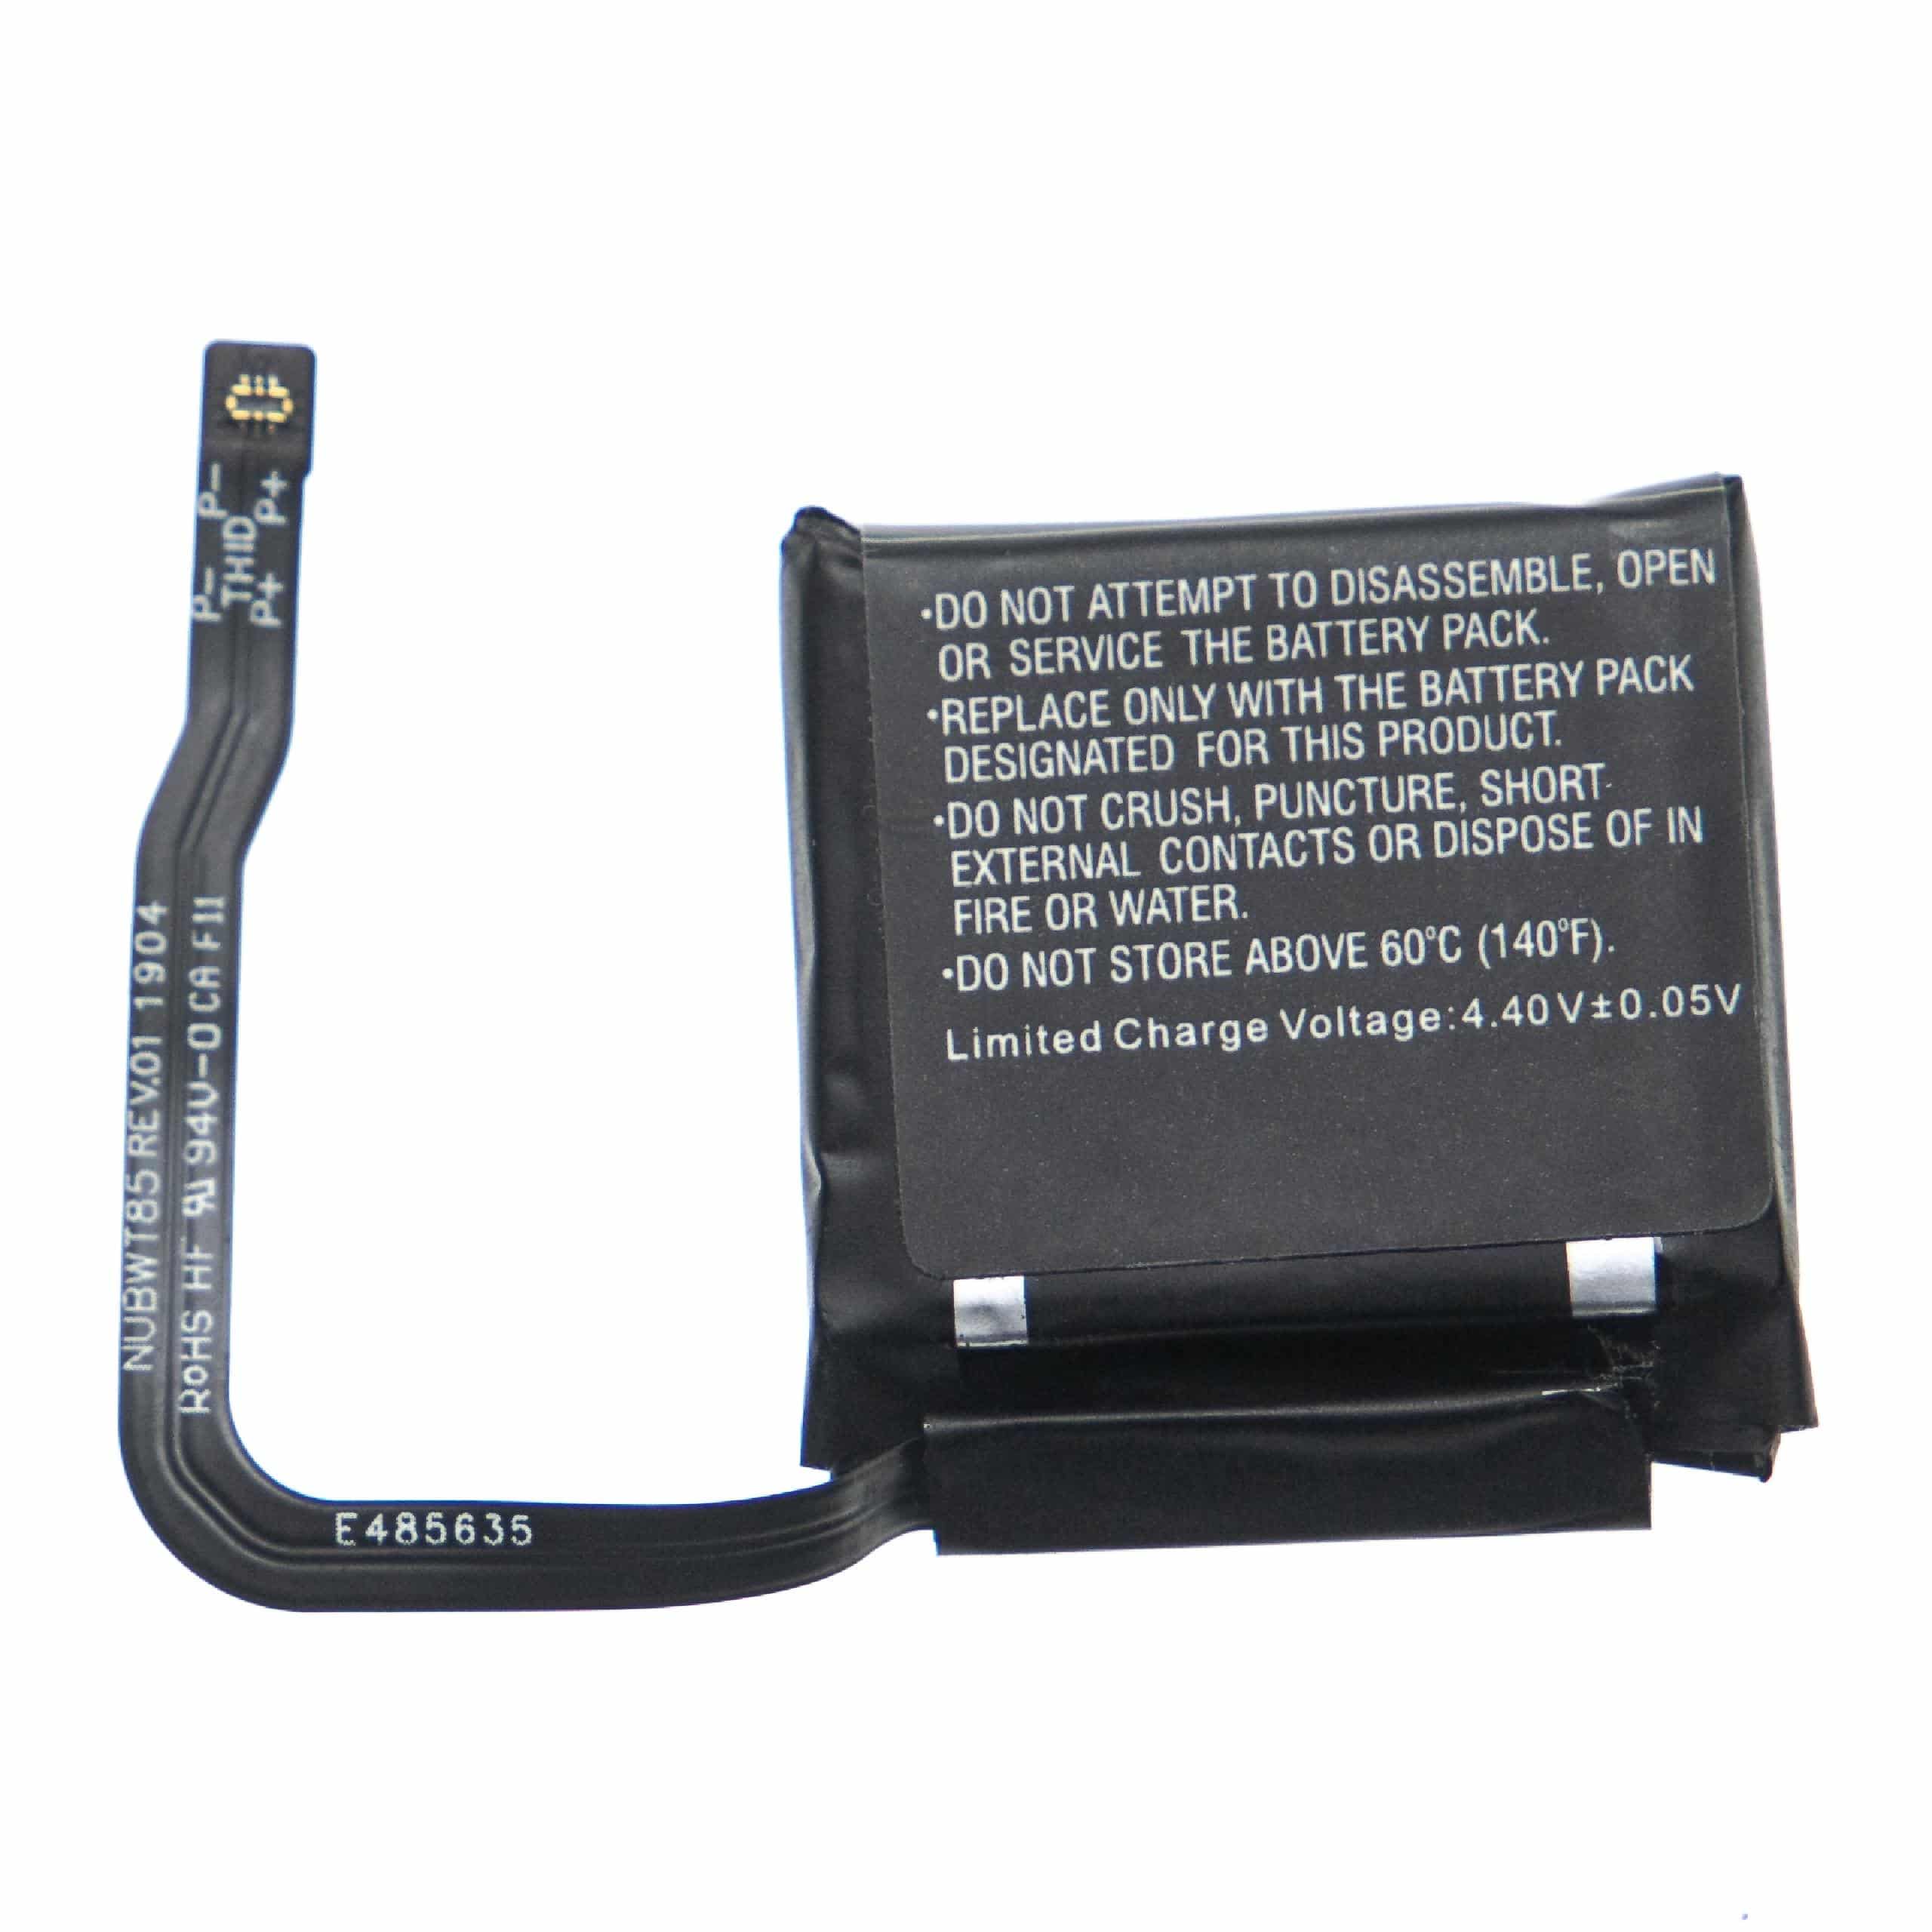 Smartwatch Battery Replacement for Nubia Li3905T44P6h292752 - 450mAh 3.85V Li-polymer